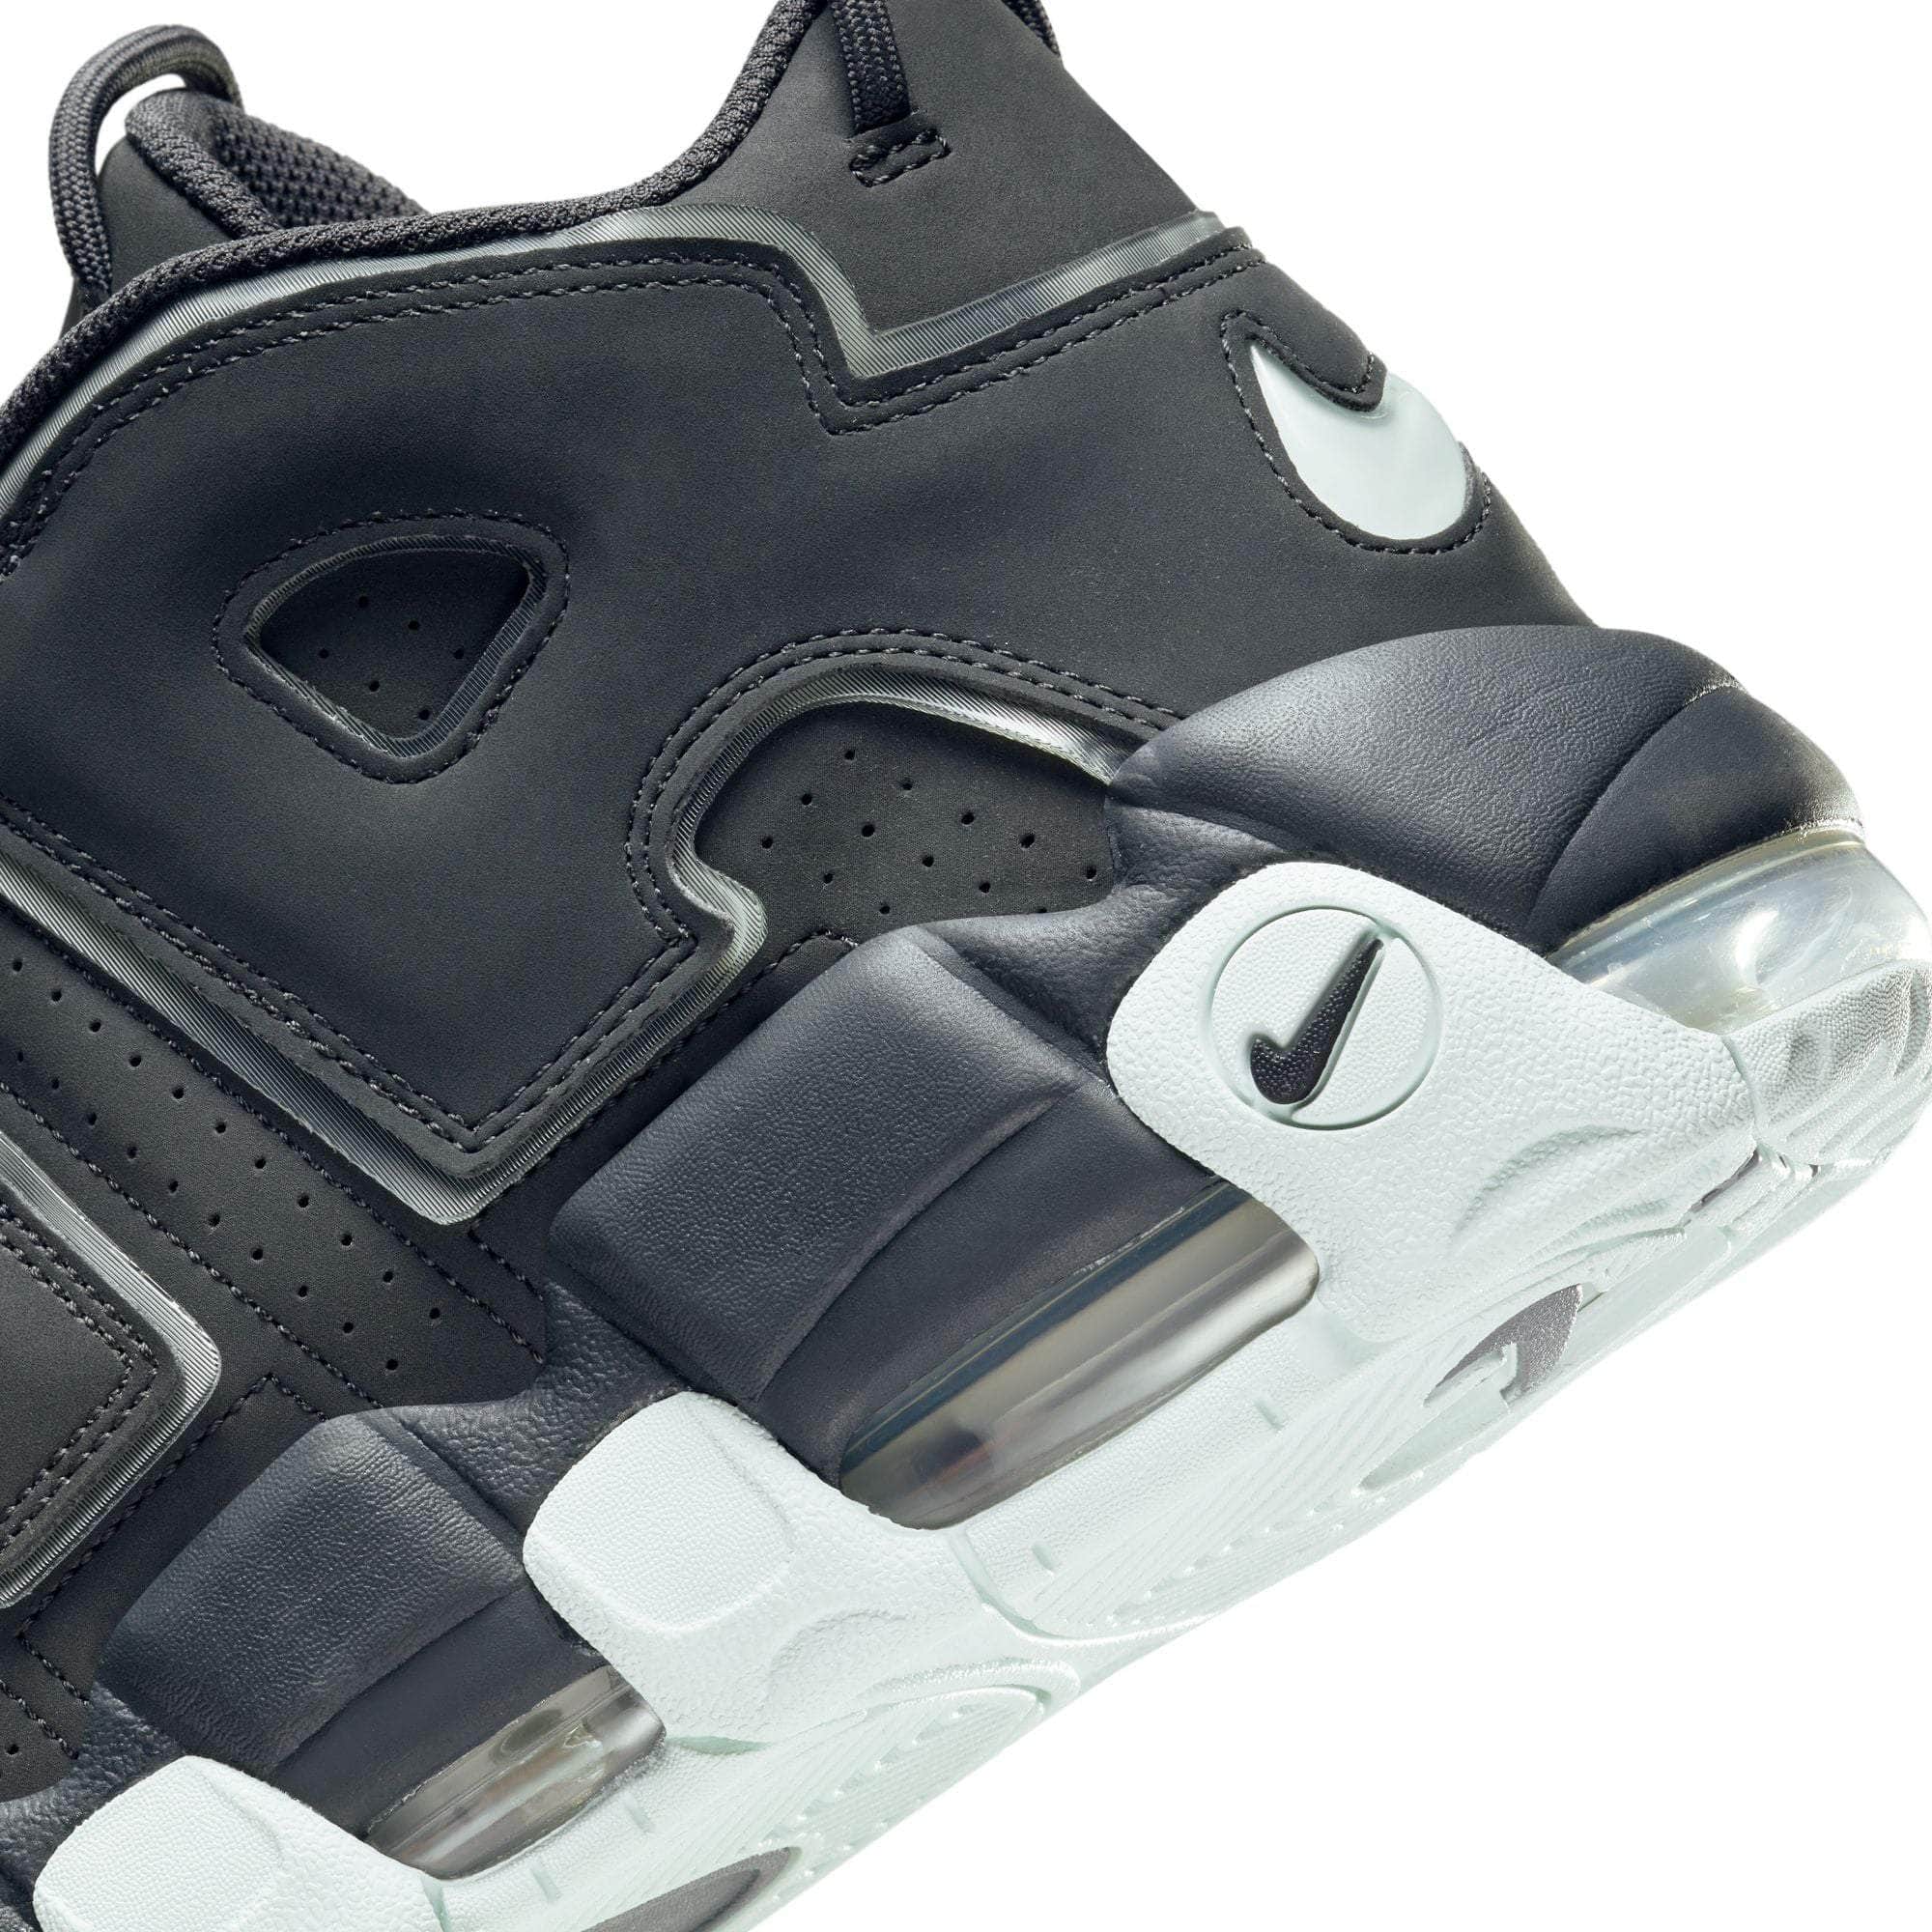 Nike FOOTWEAR Nike Air More Uptempo "Dark Smoke Grey" - Men's